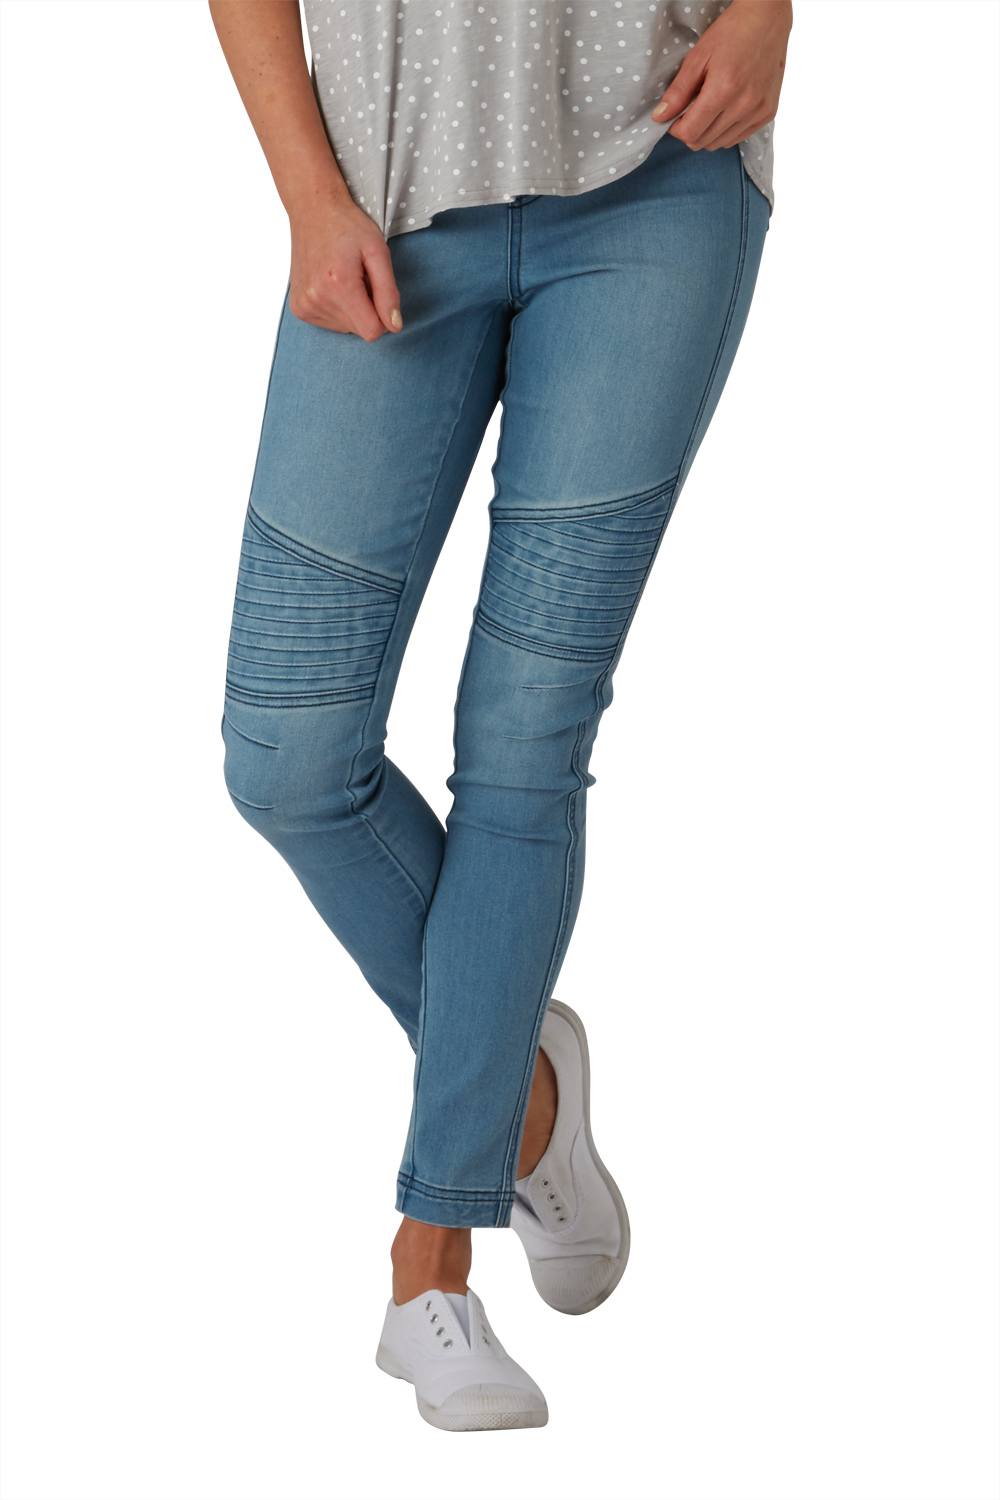 jump jeans online